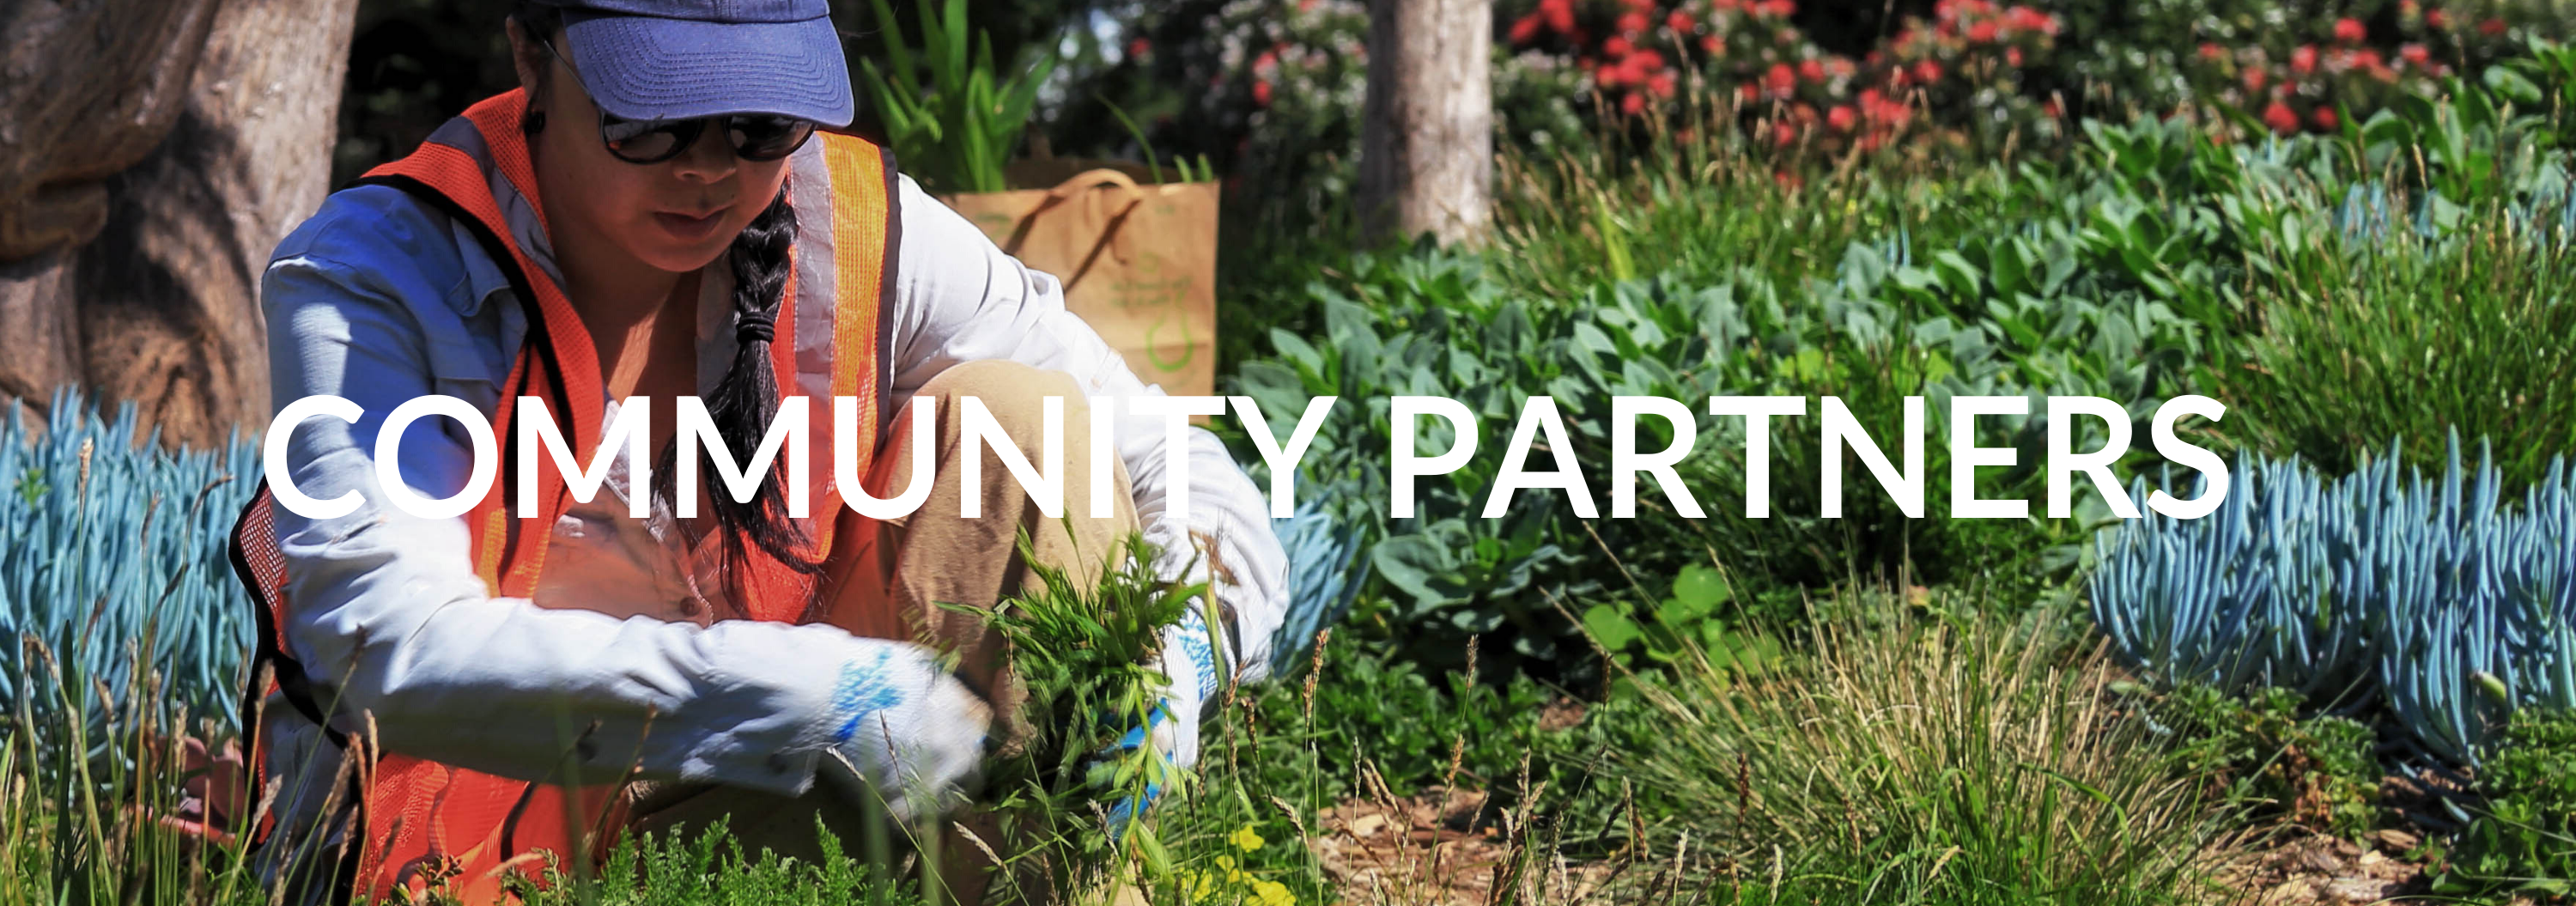 Our Community Partners San Francisco Parks Alliance